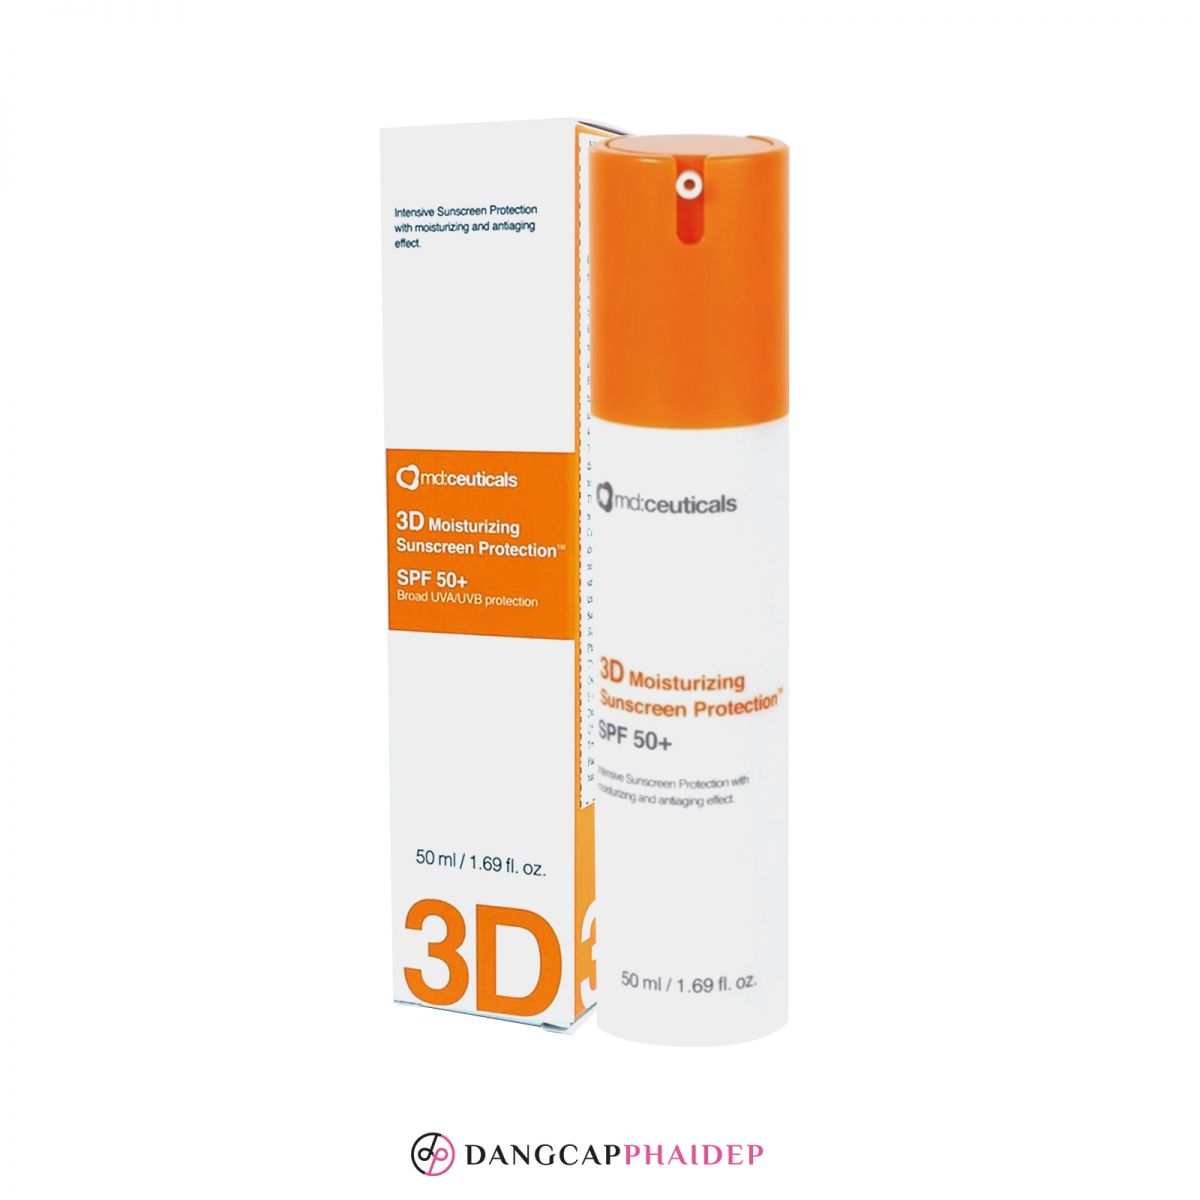 Kem chống nắng Md Ceuticals 3D Moisturizing Sunscreen Protection SPF 50+ dưỡng ẩm bảo vệ da sau laser 50ml